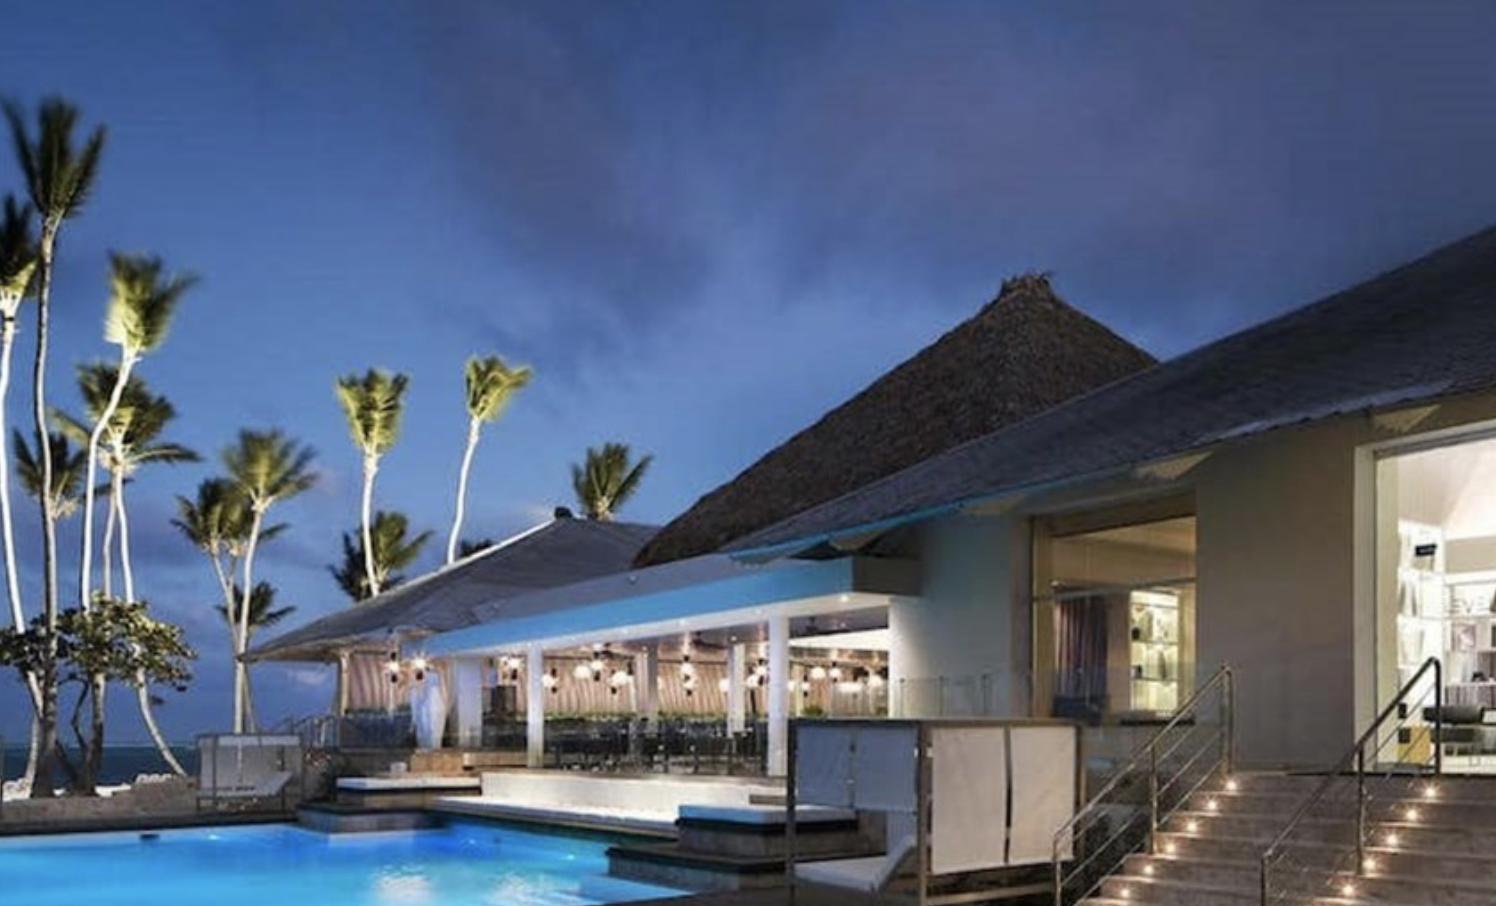 Melia opens Punta Cana beach hotels - Boutique Hotel News